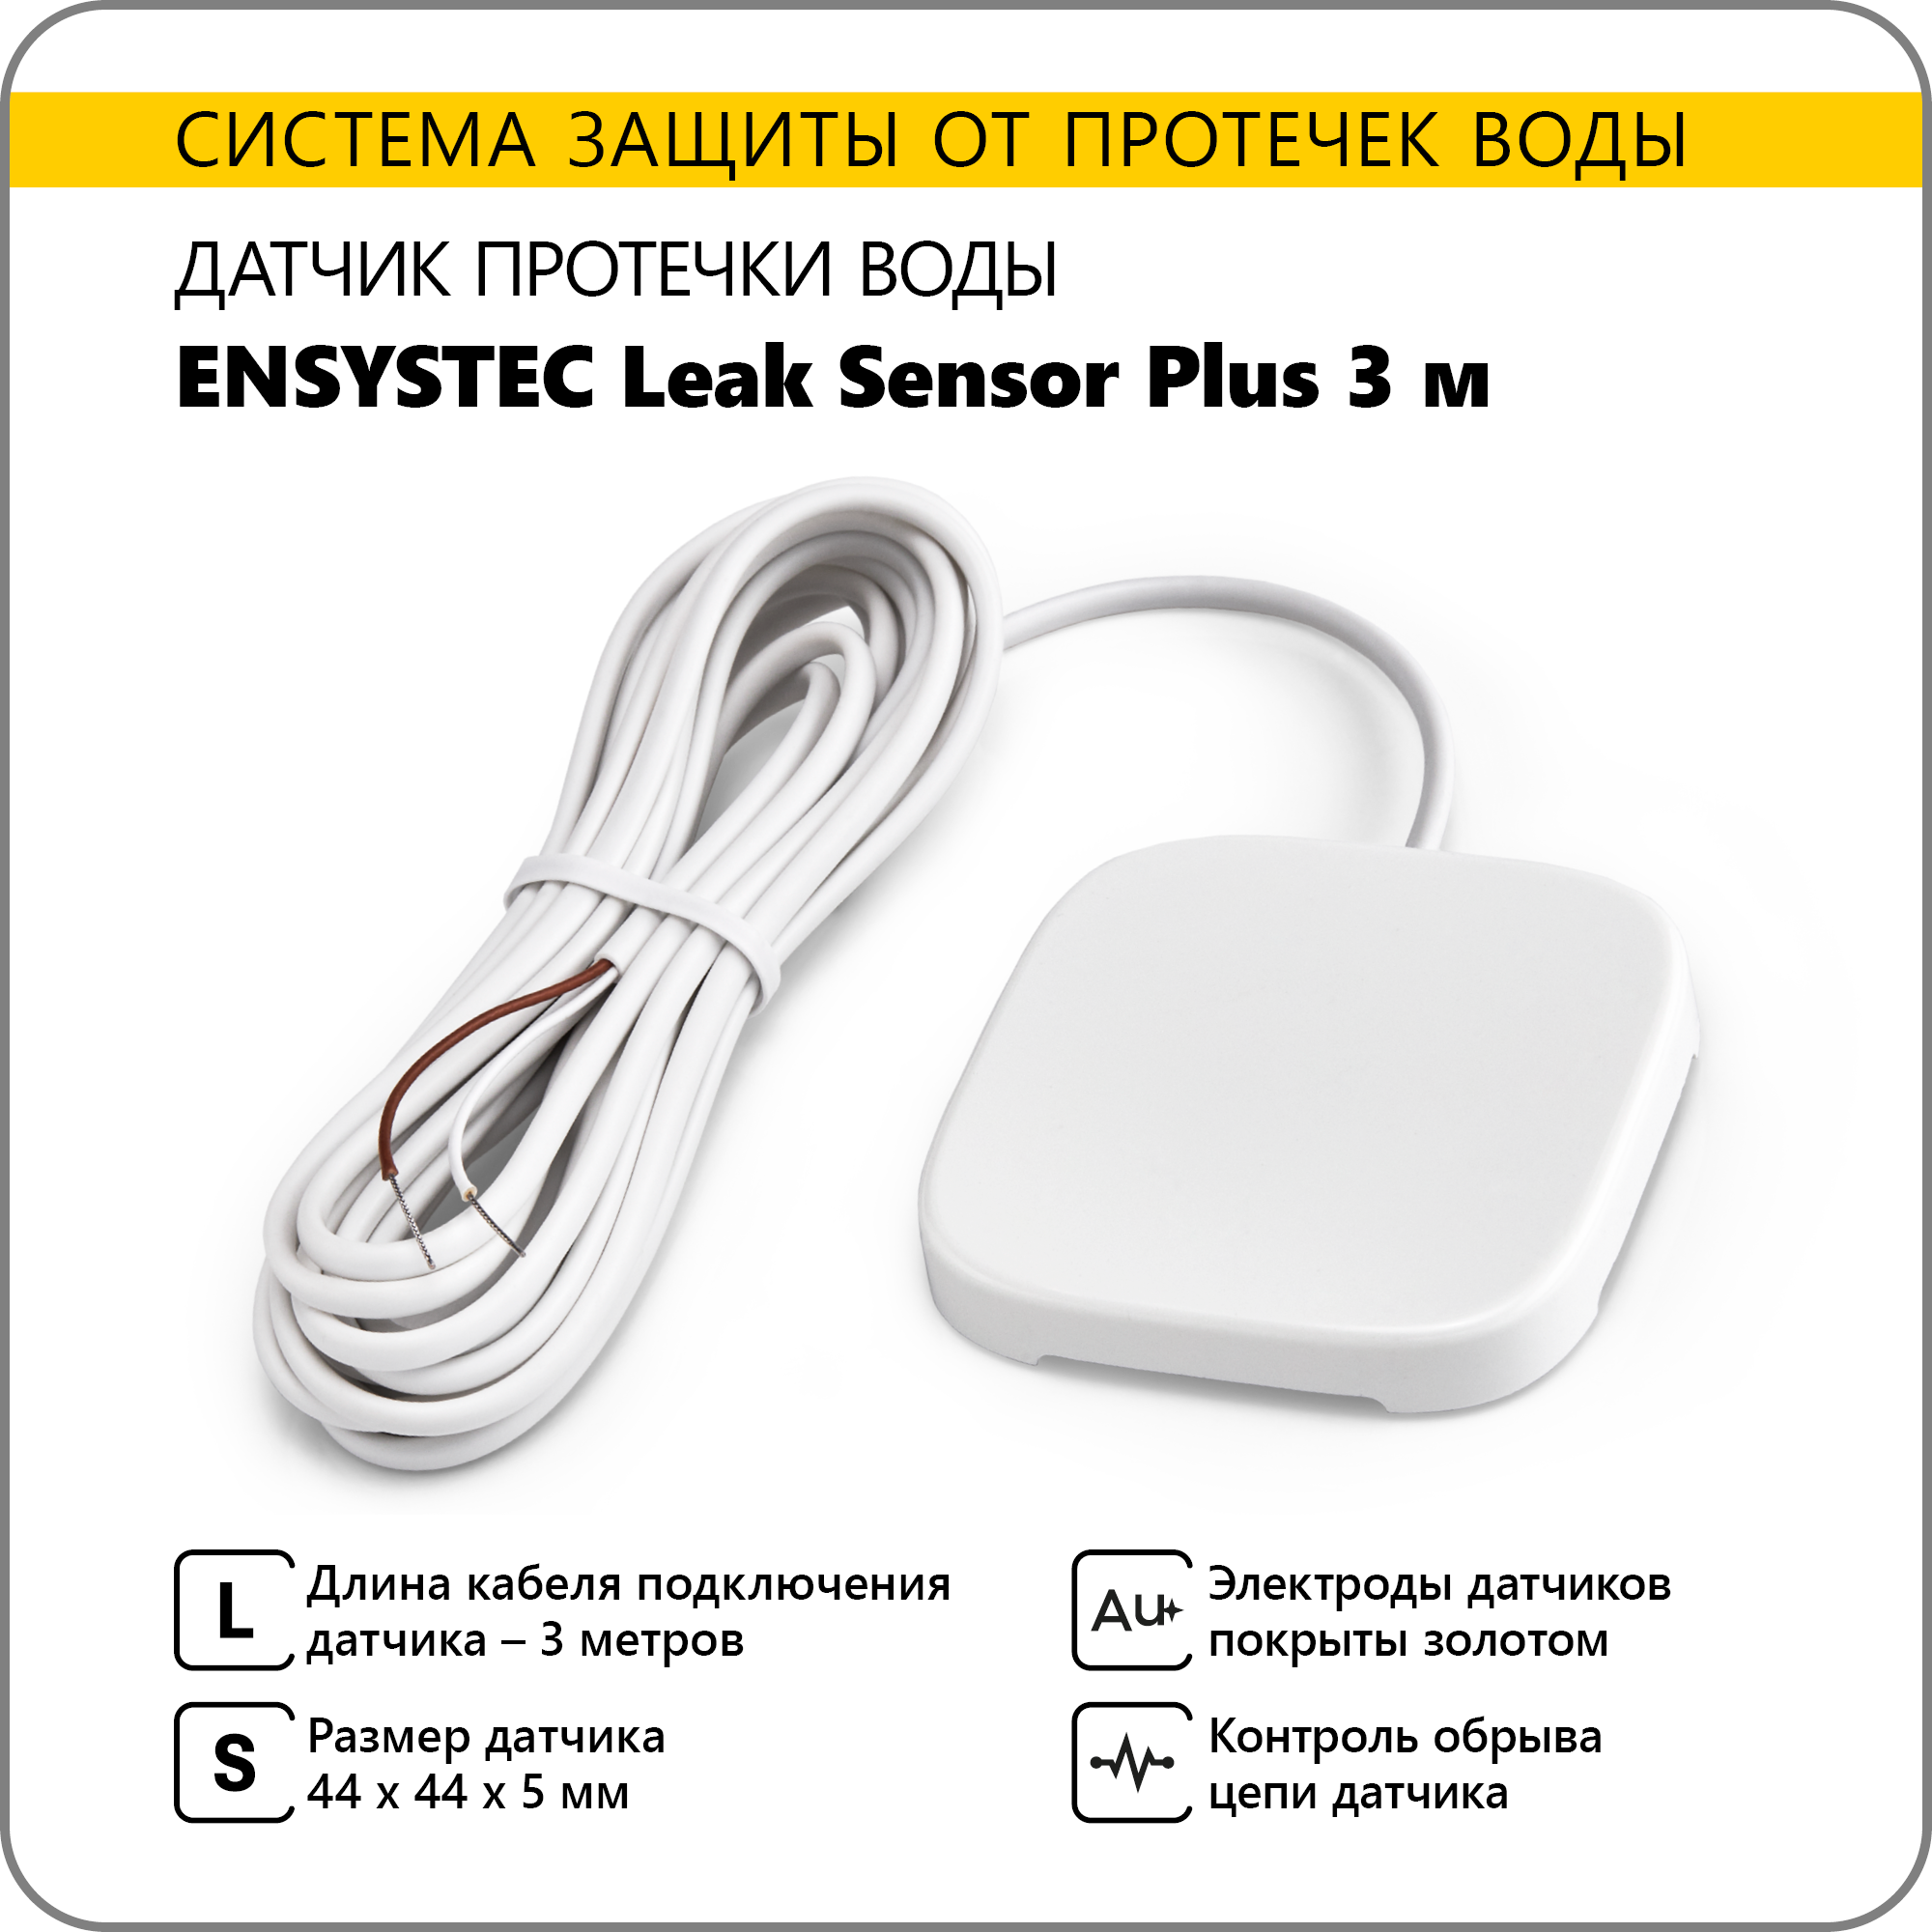 Датчик протечки воды Ensystec Leak Sensor Plus 3 м